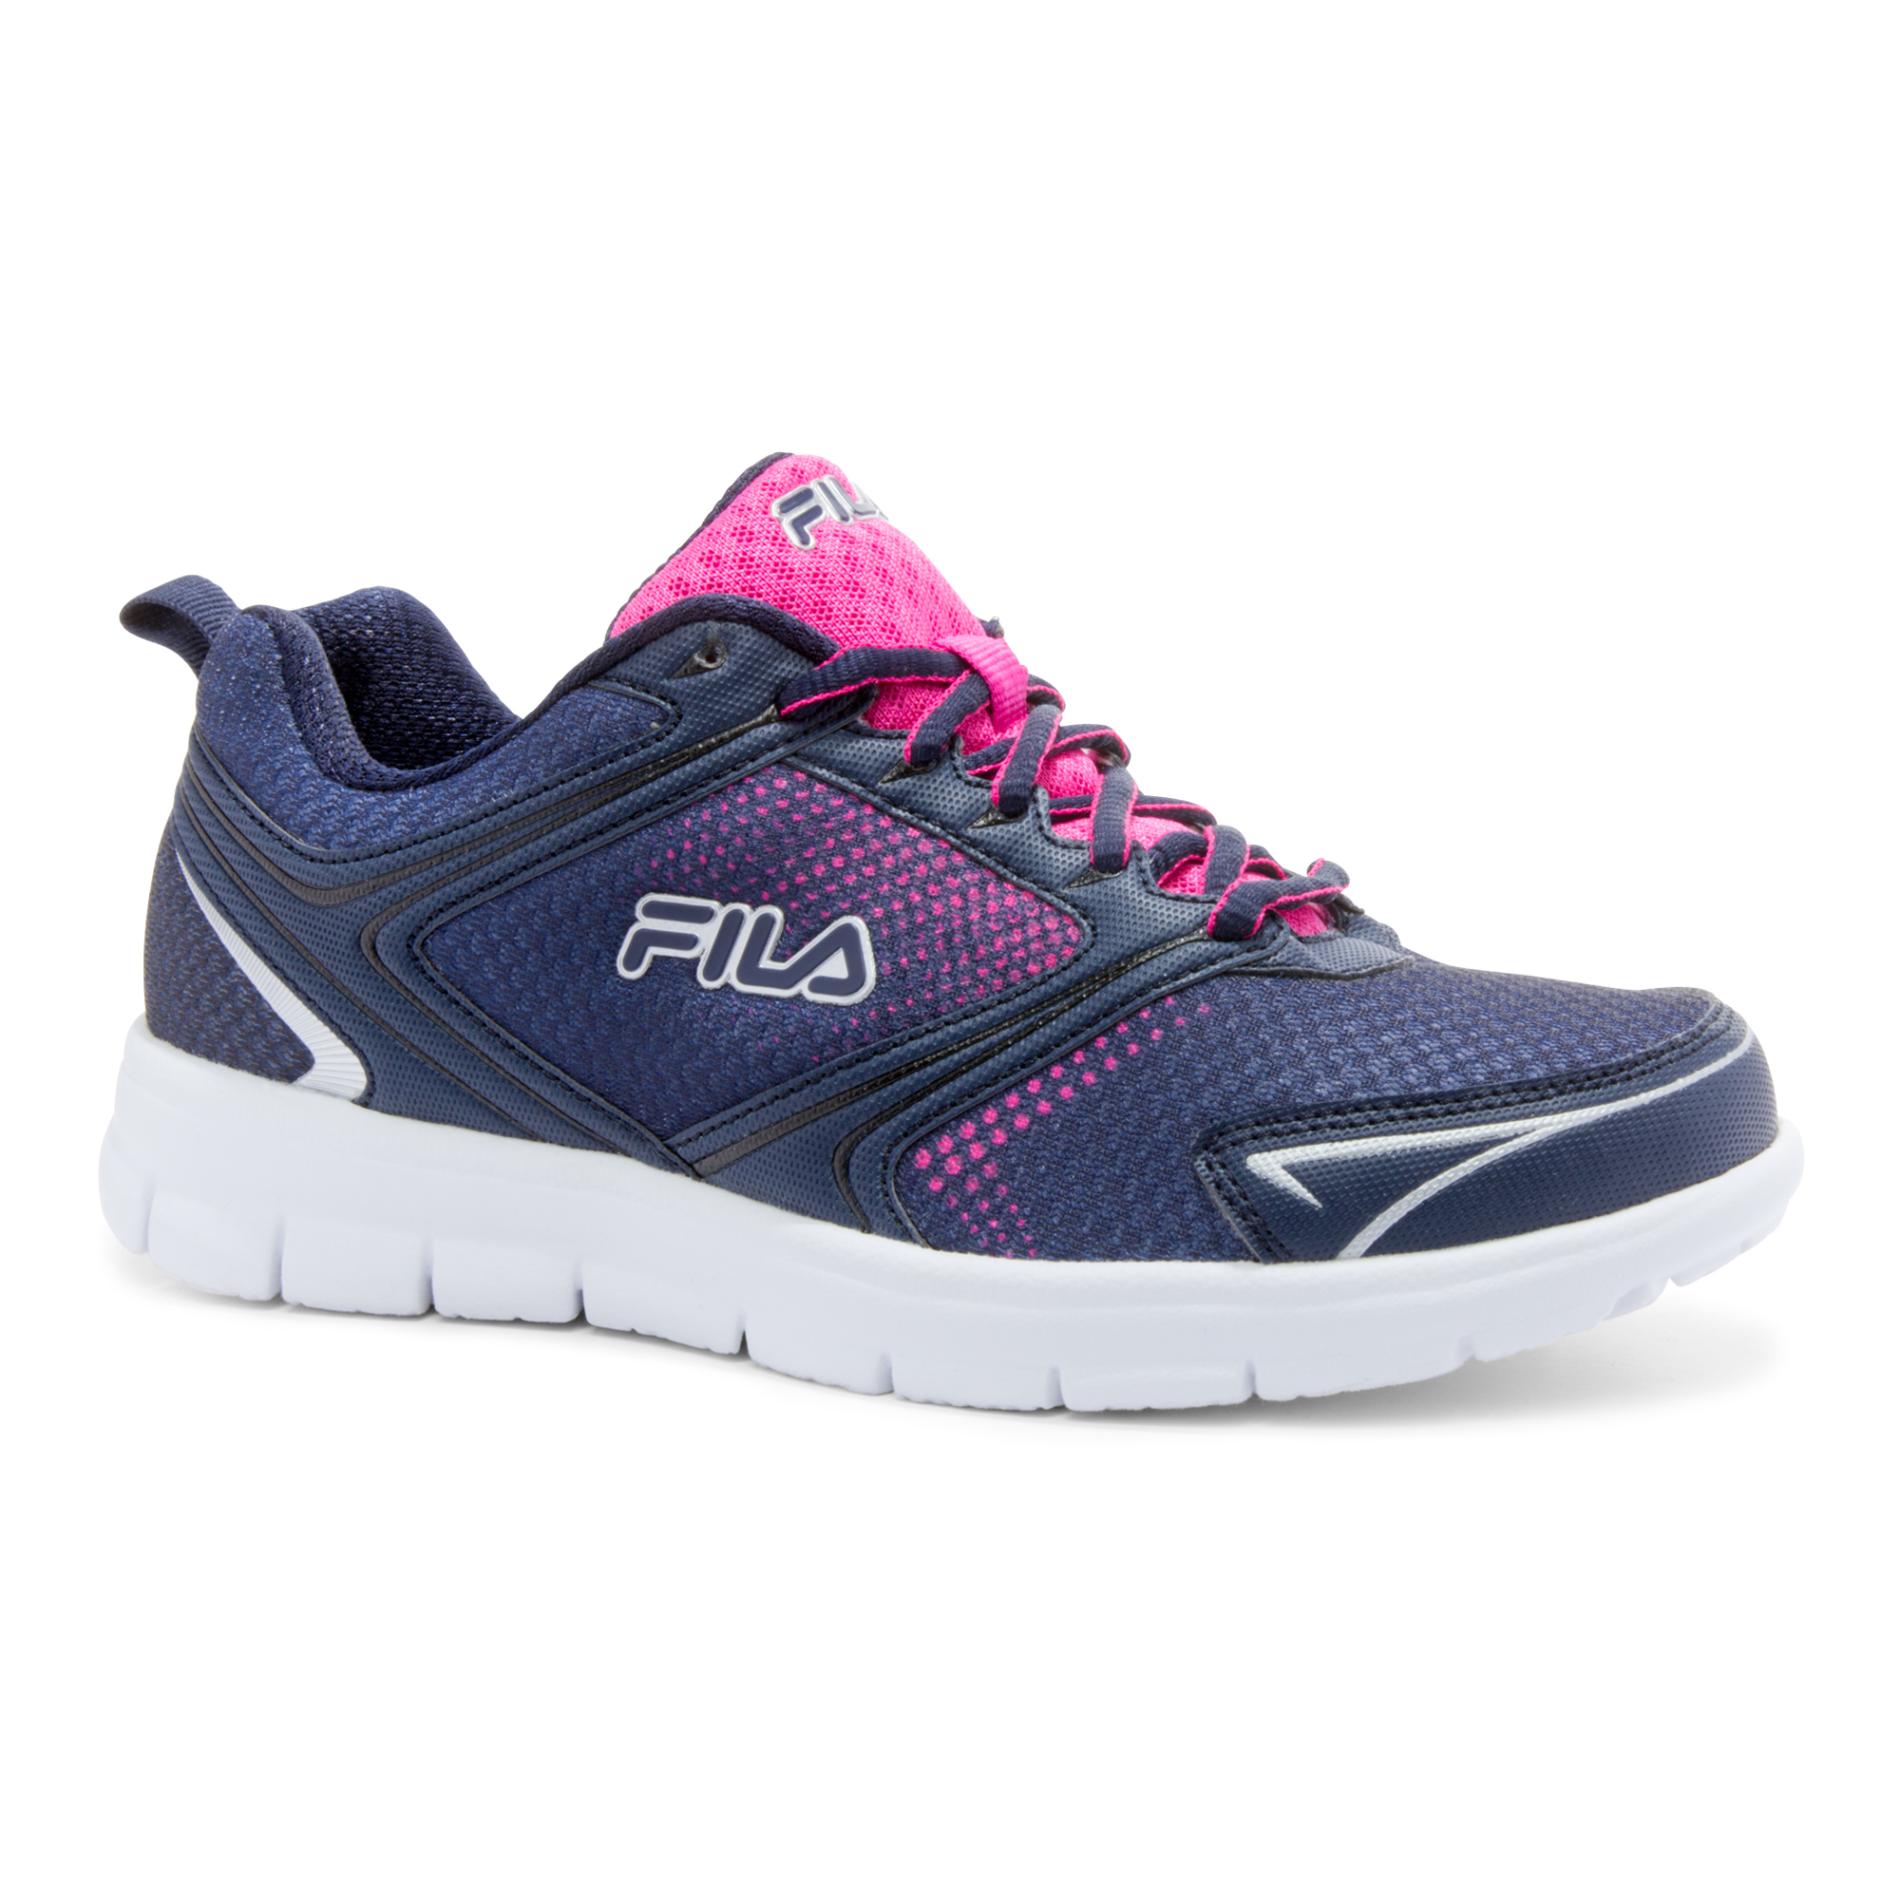 Fila Women's Windstar 2 Navy/Pink Running Shoe